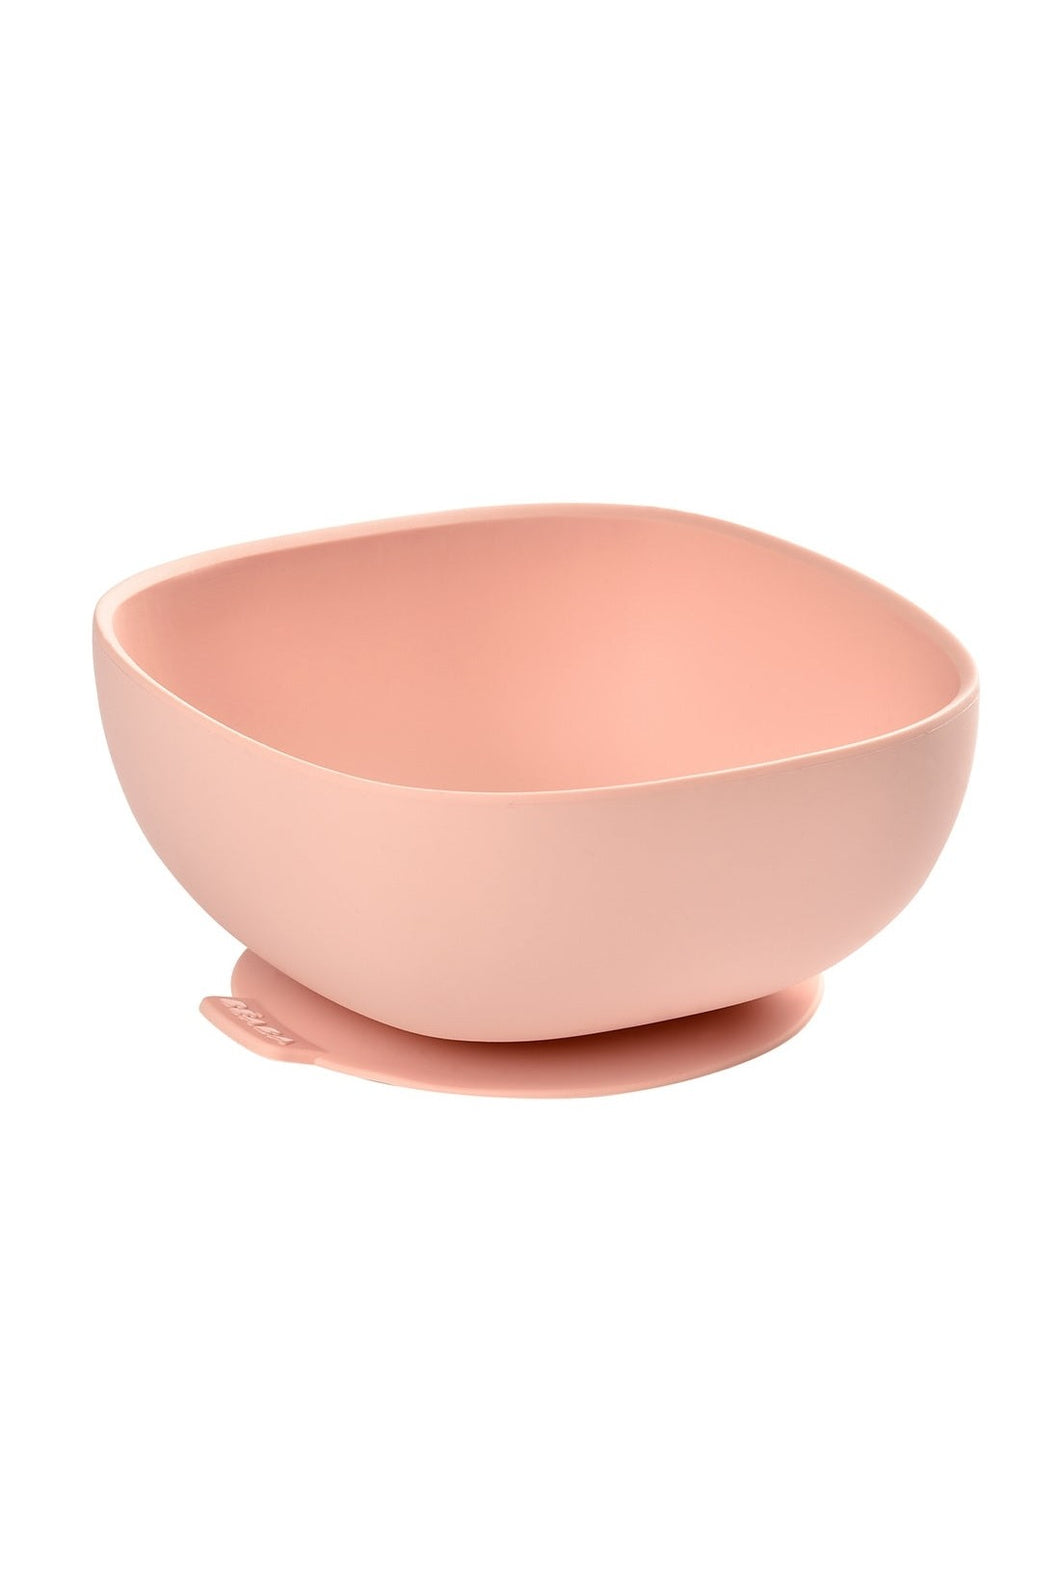 Beaba Silicone Suction Bowl Pink